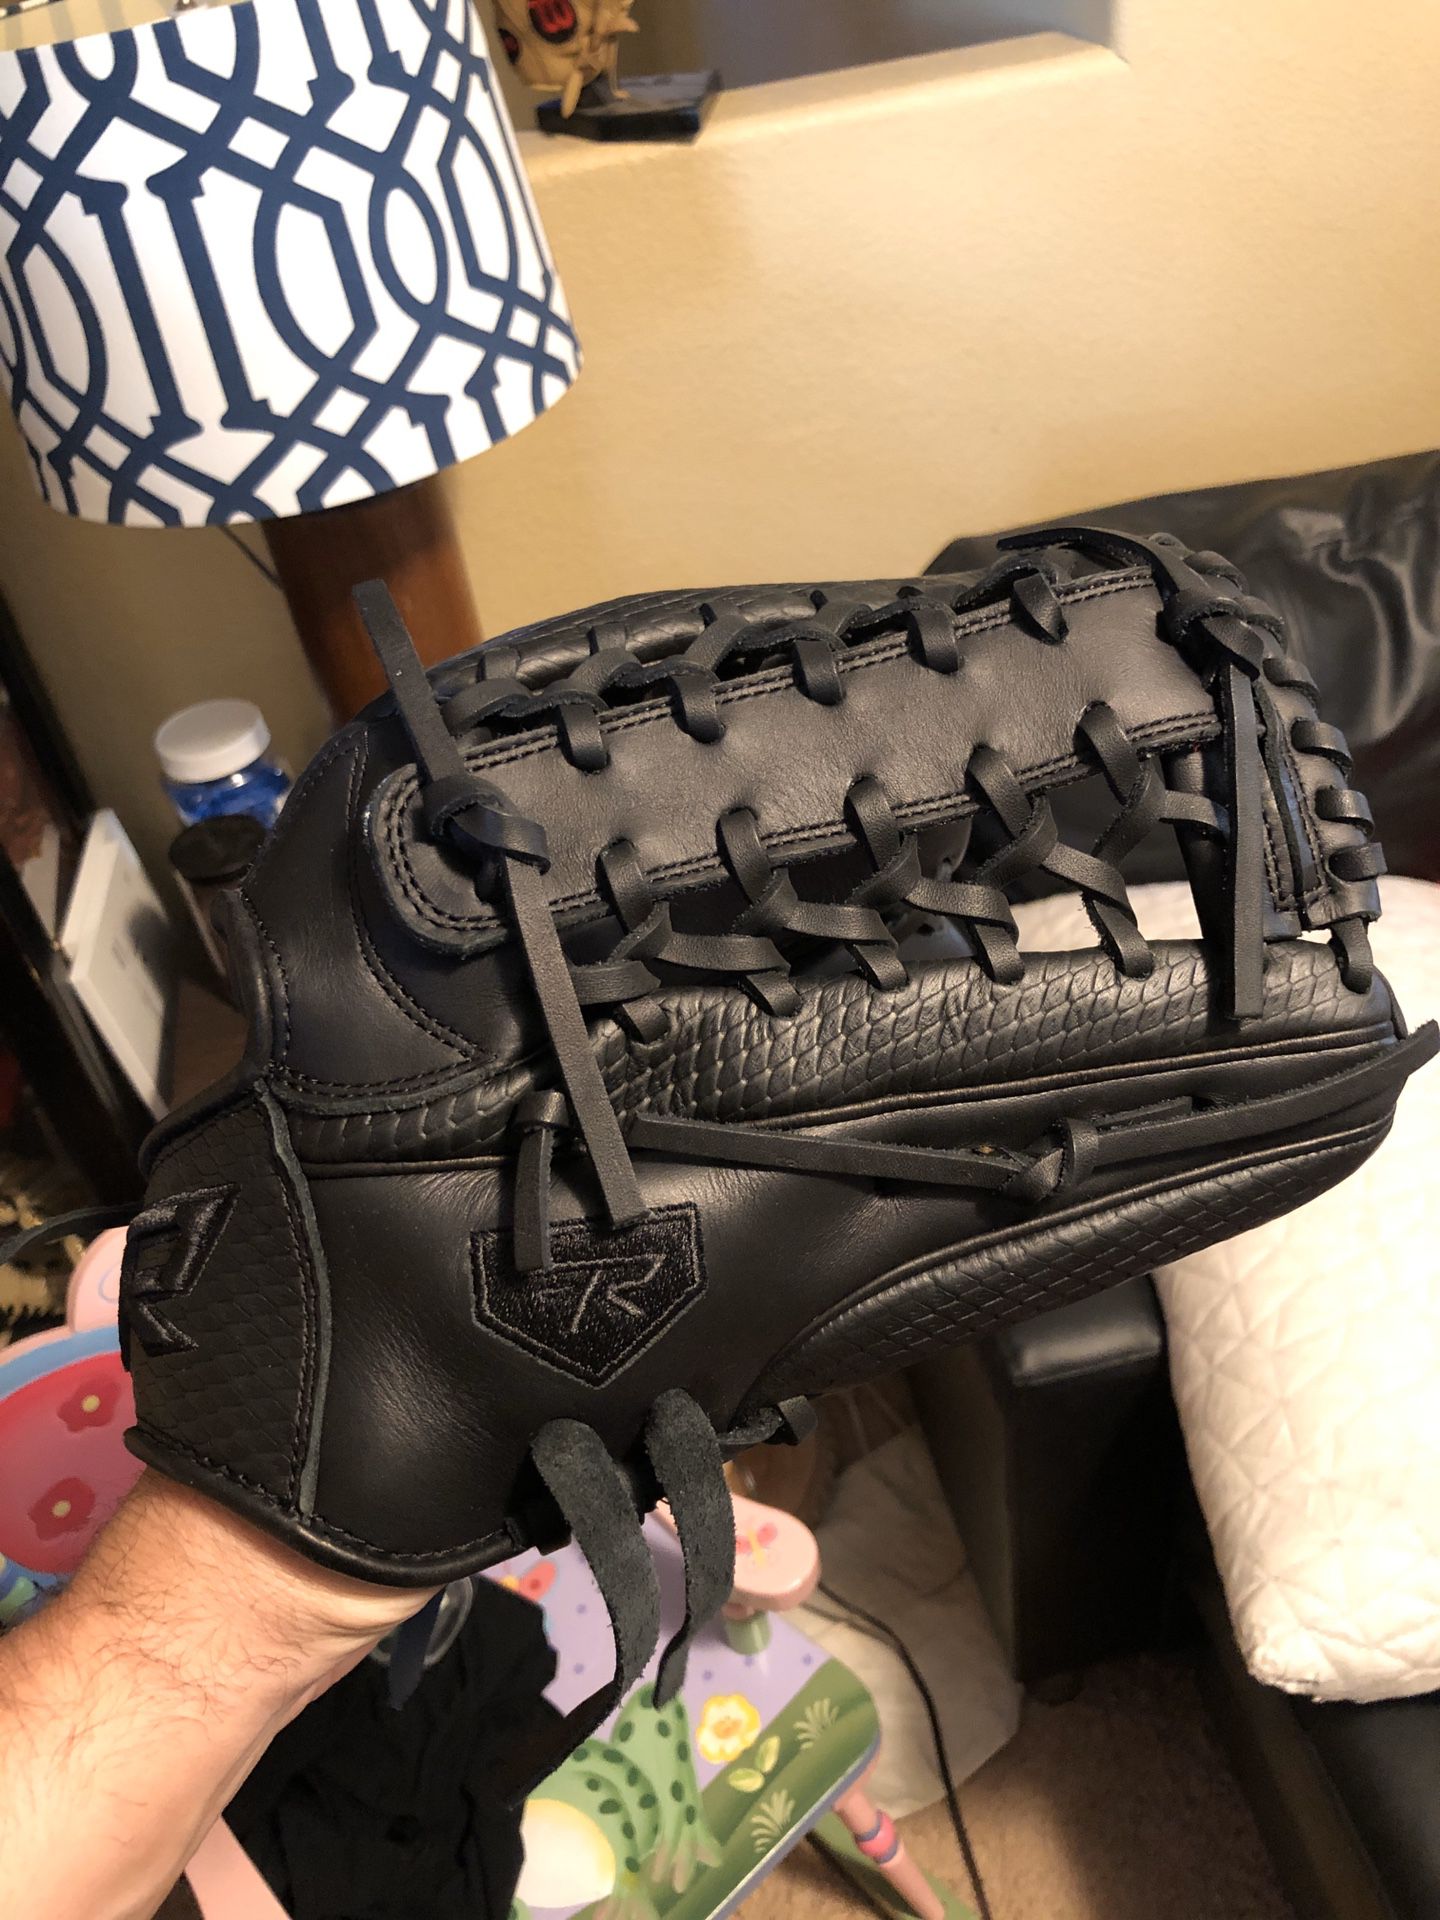 Baseball softball glove